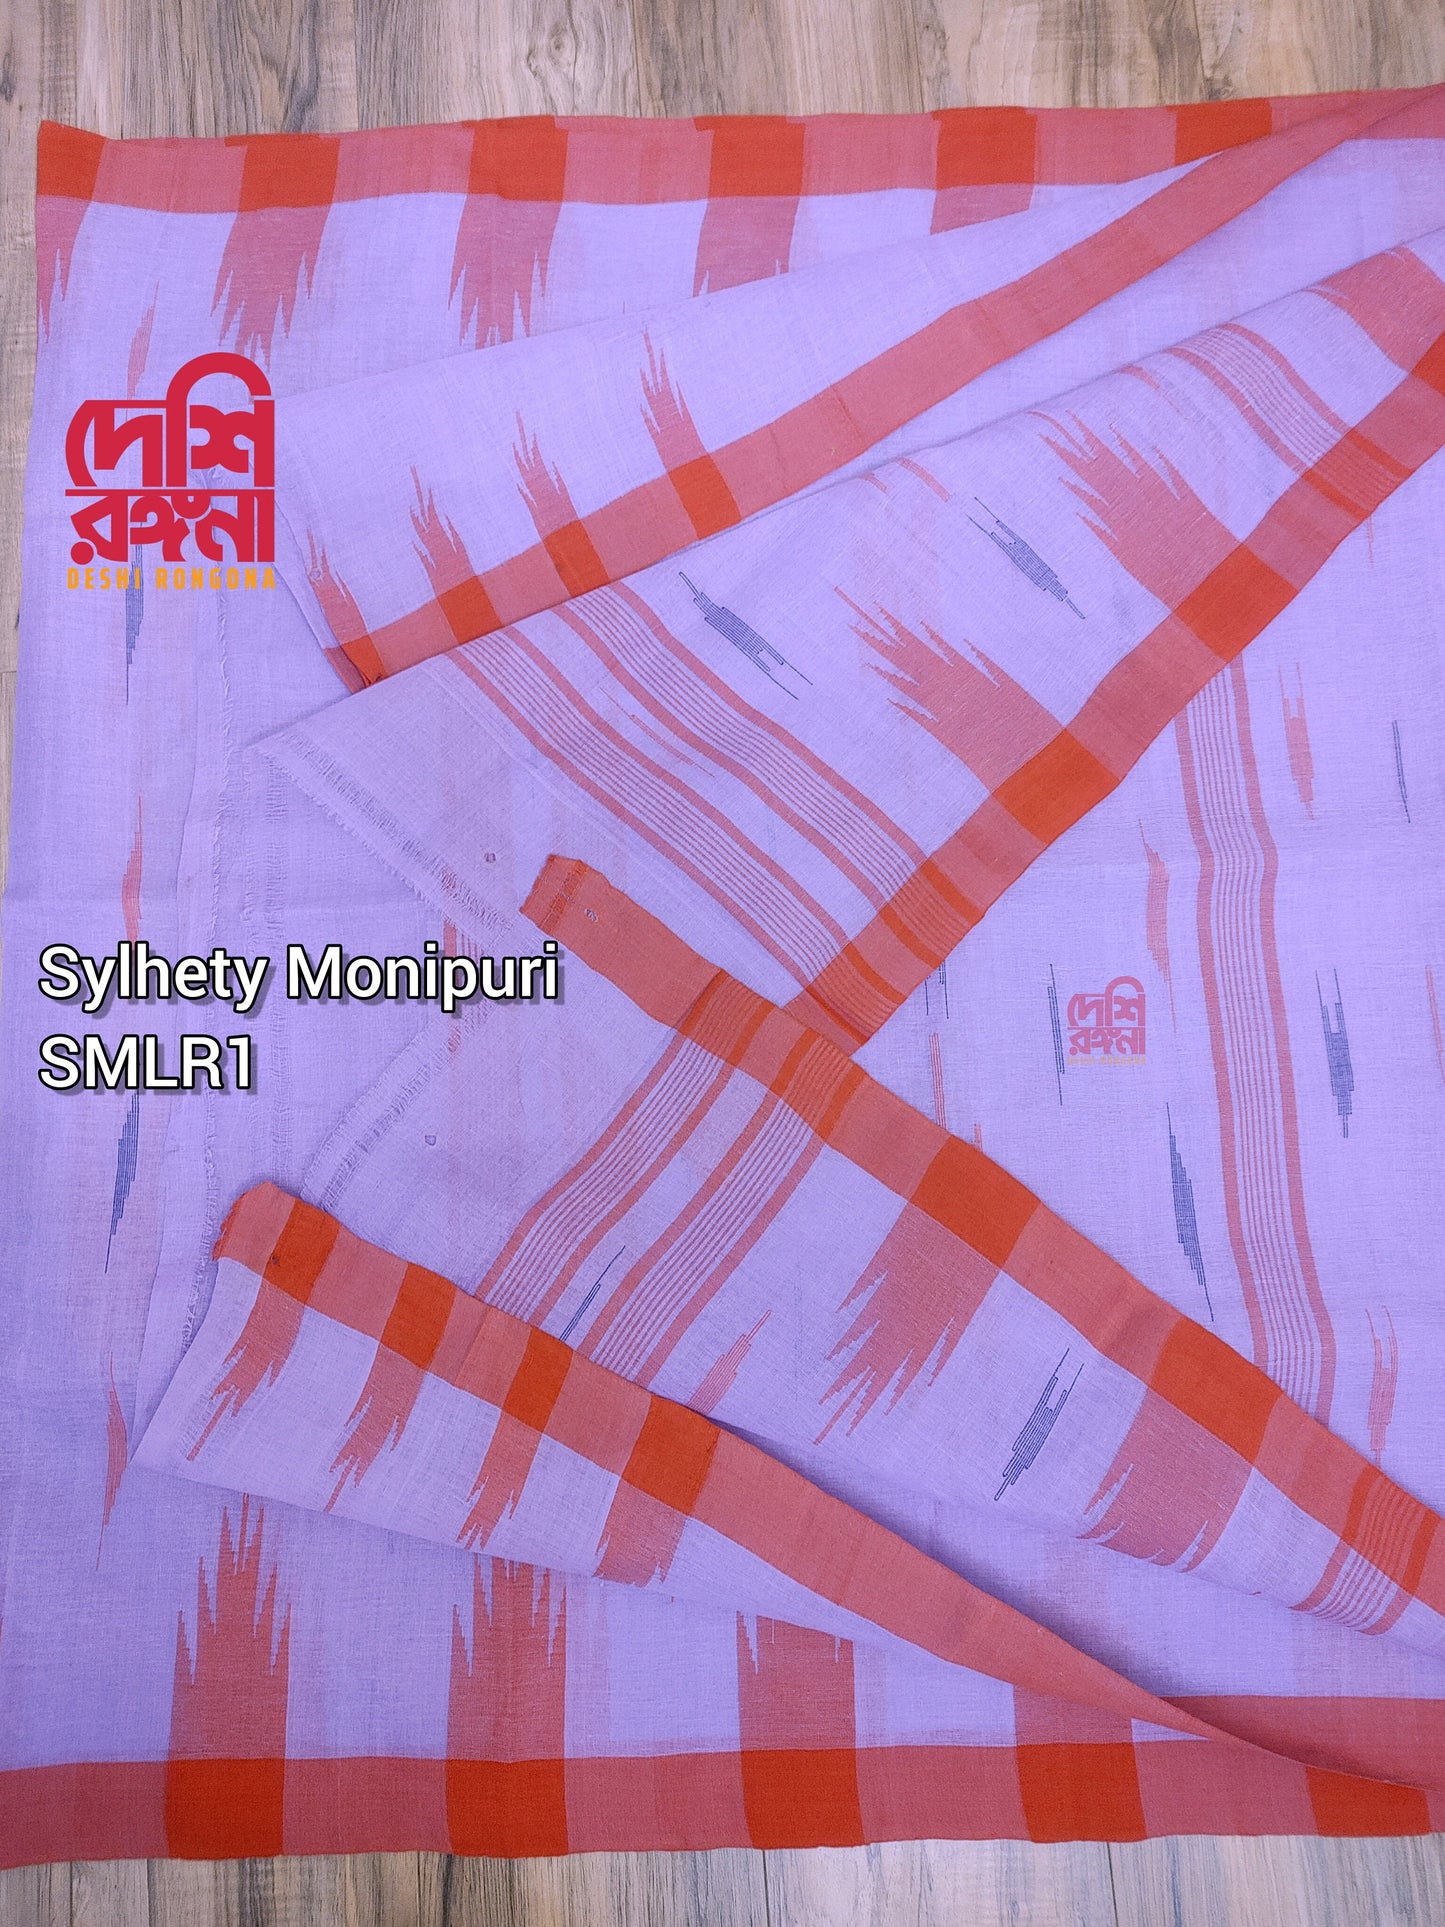 Sylheti Original Monipuri Handwoven Soft Cotton Saree, Beautiful Lavender with Red hand Woven Border,Bangladeshi Tribal Traditional Saree